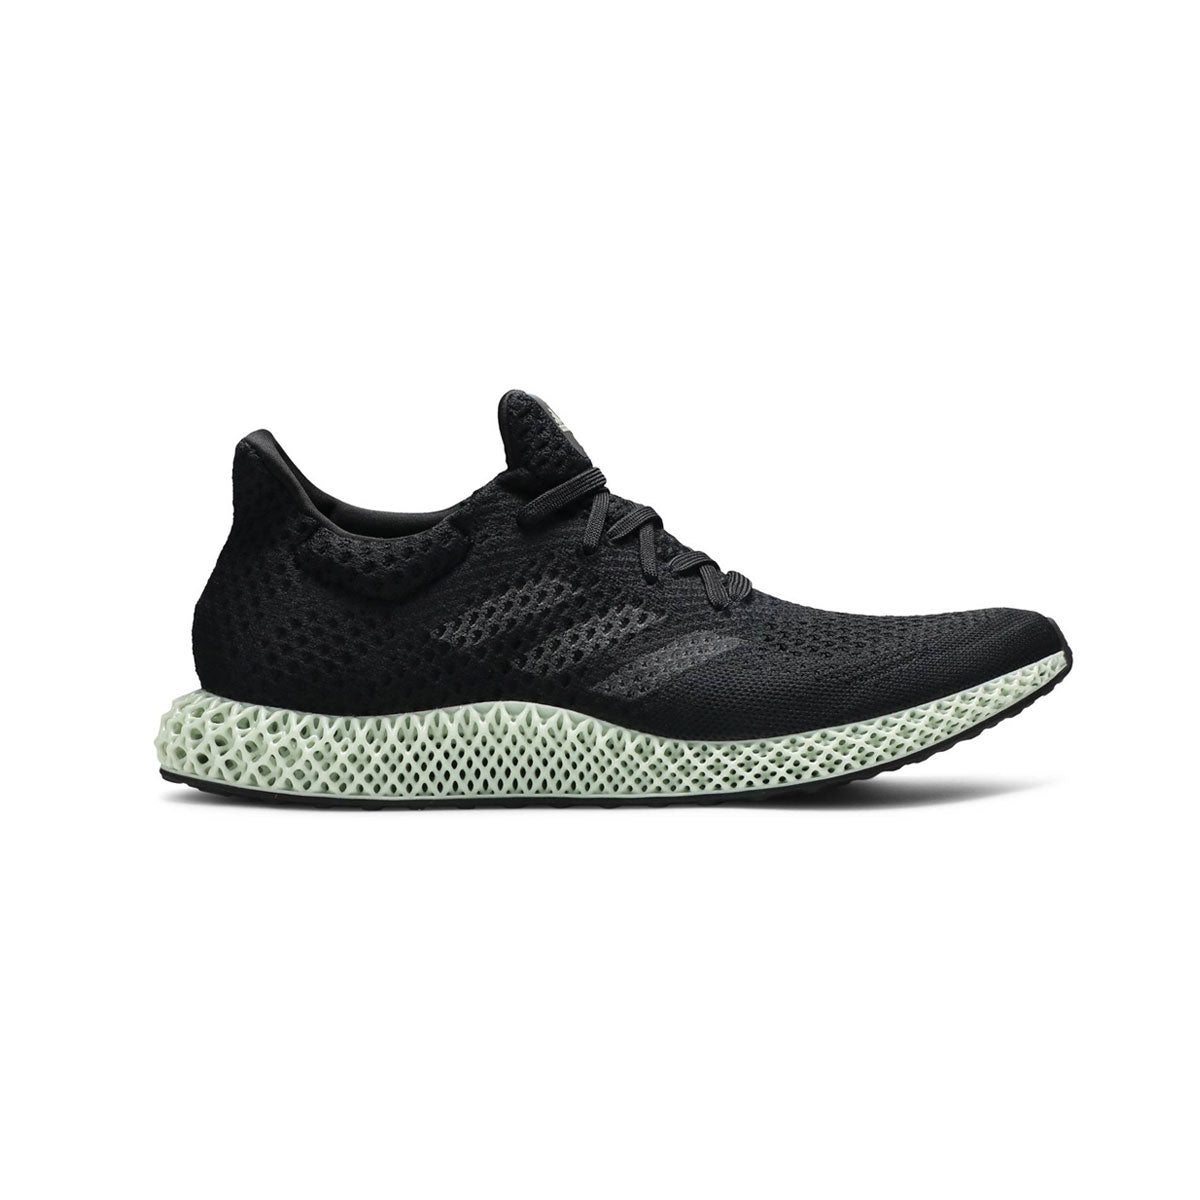 Kickzstore - Yeezys and - Adidas 4D Black Linen Green